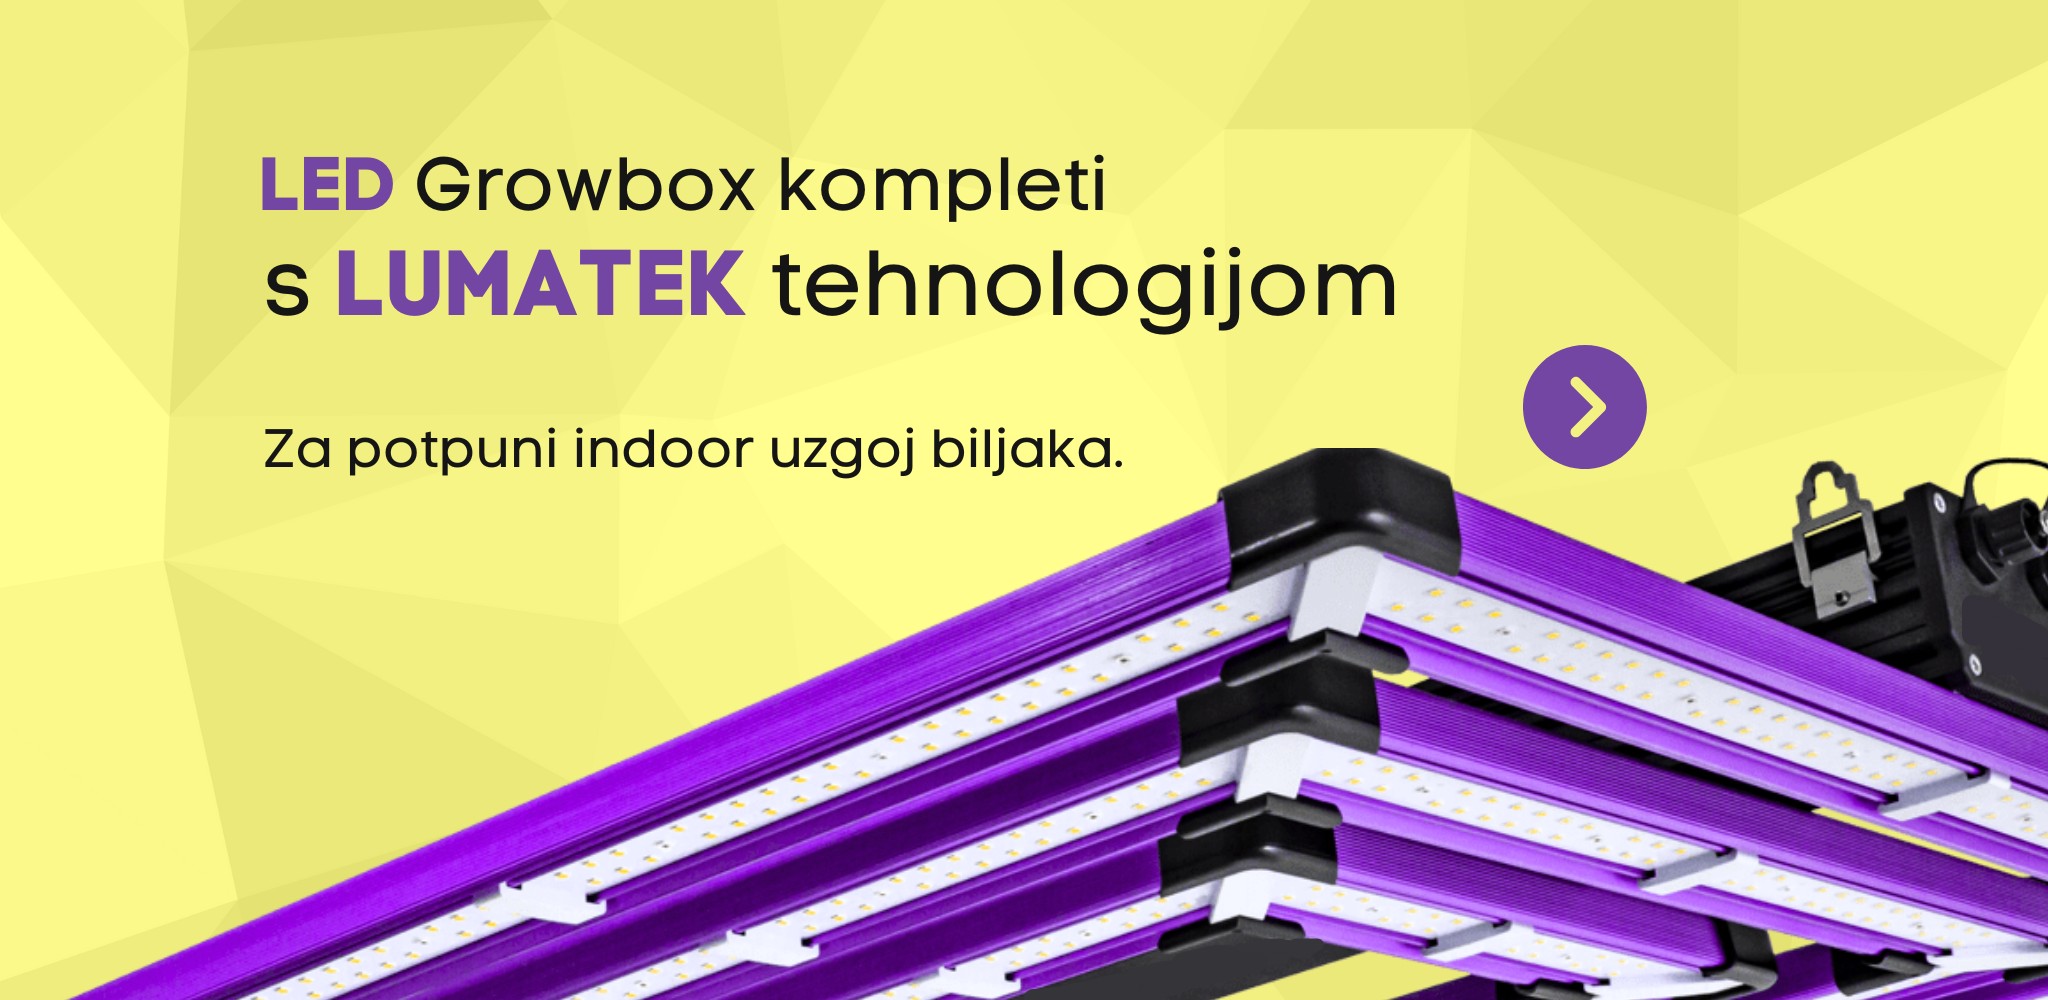 NOVO - LED SET GROWBOX